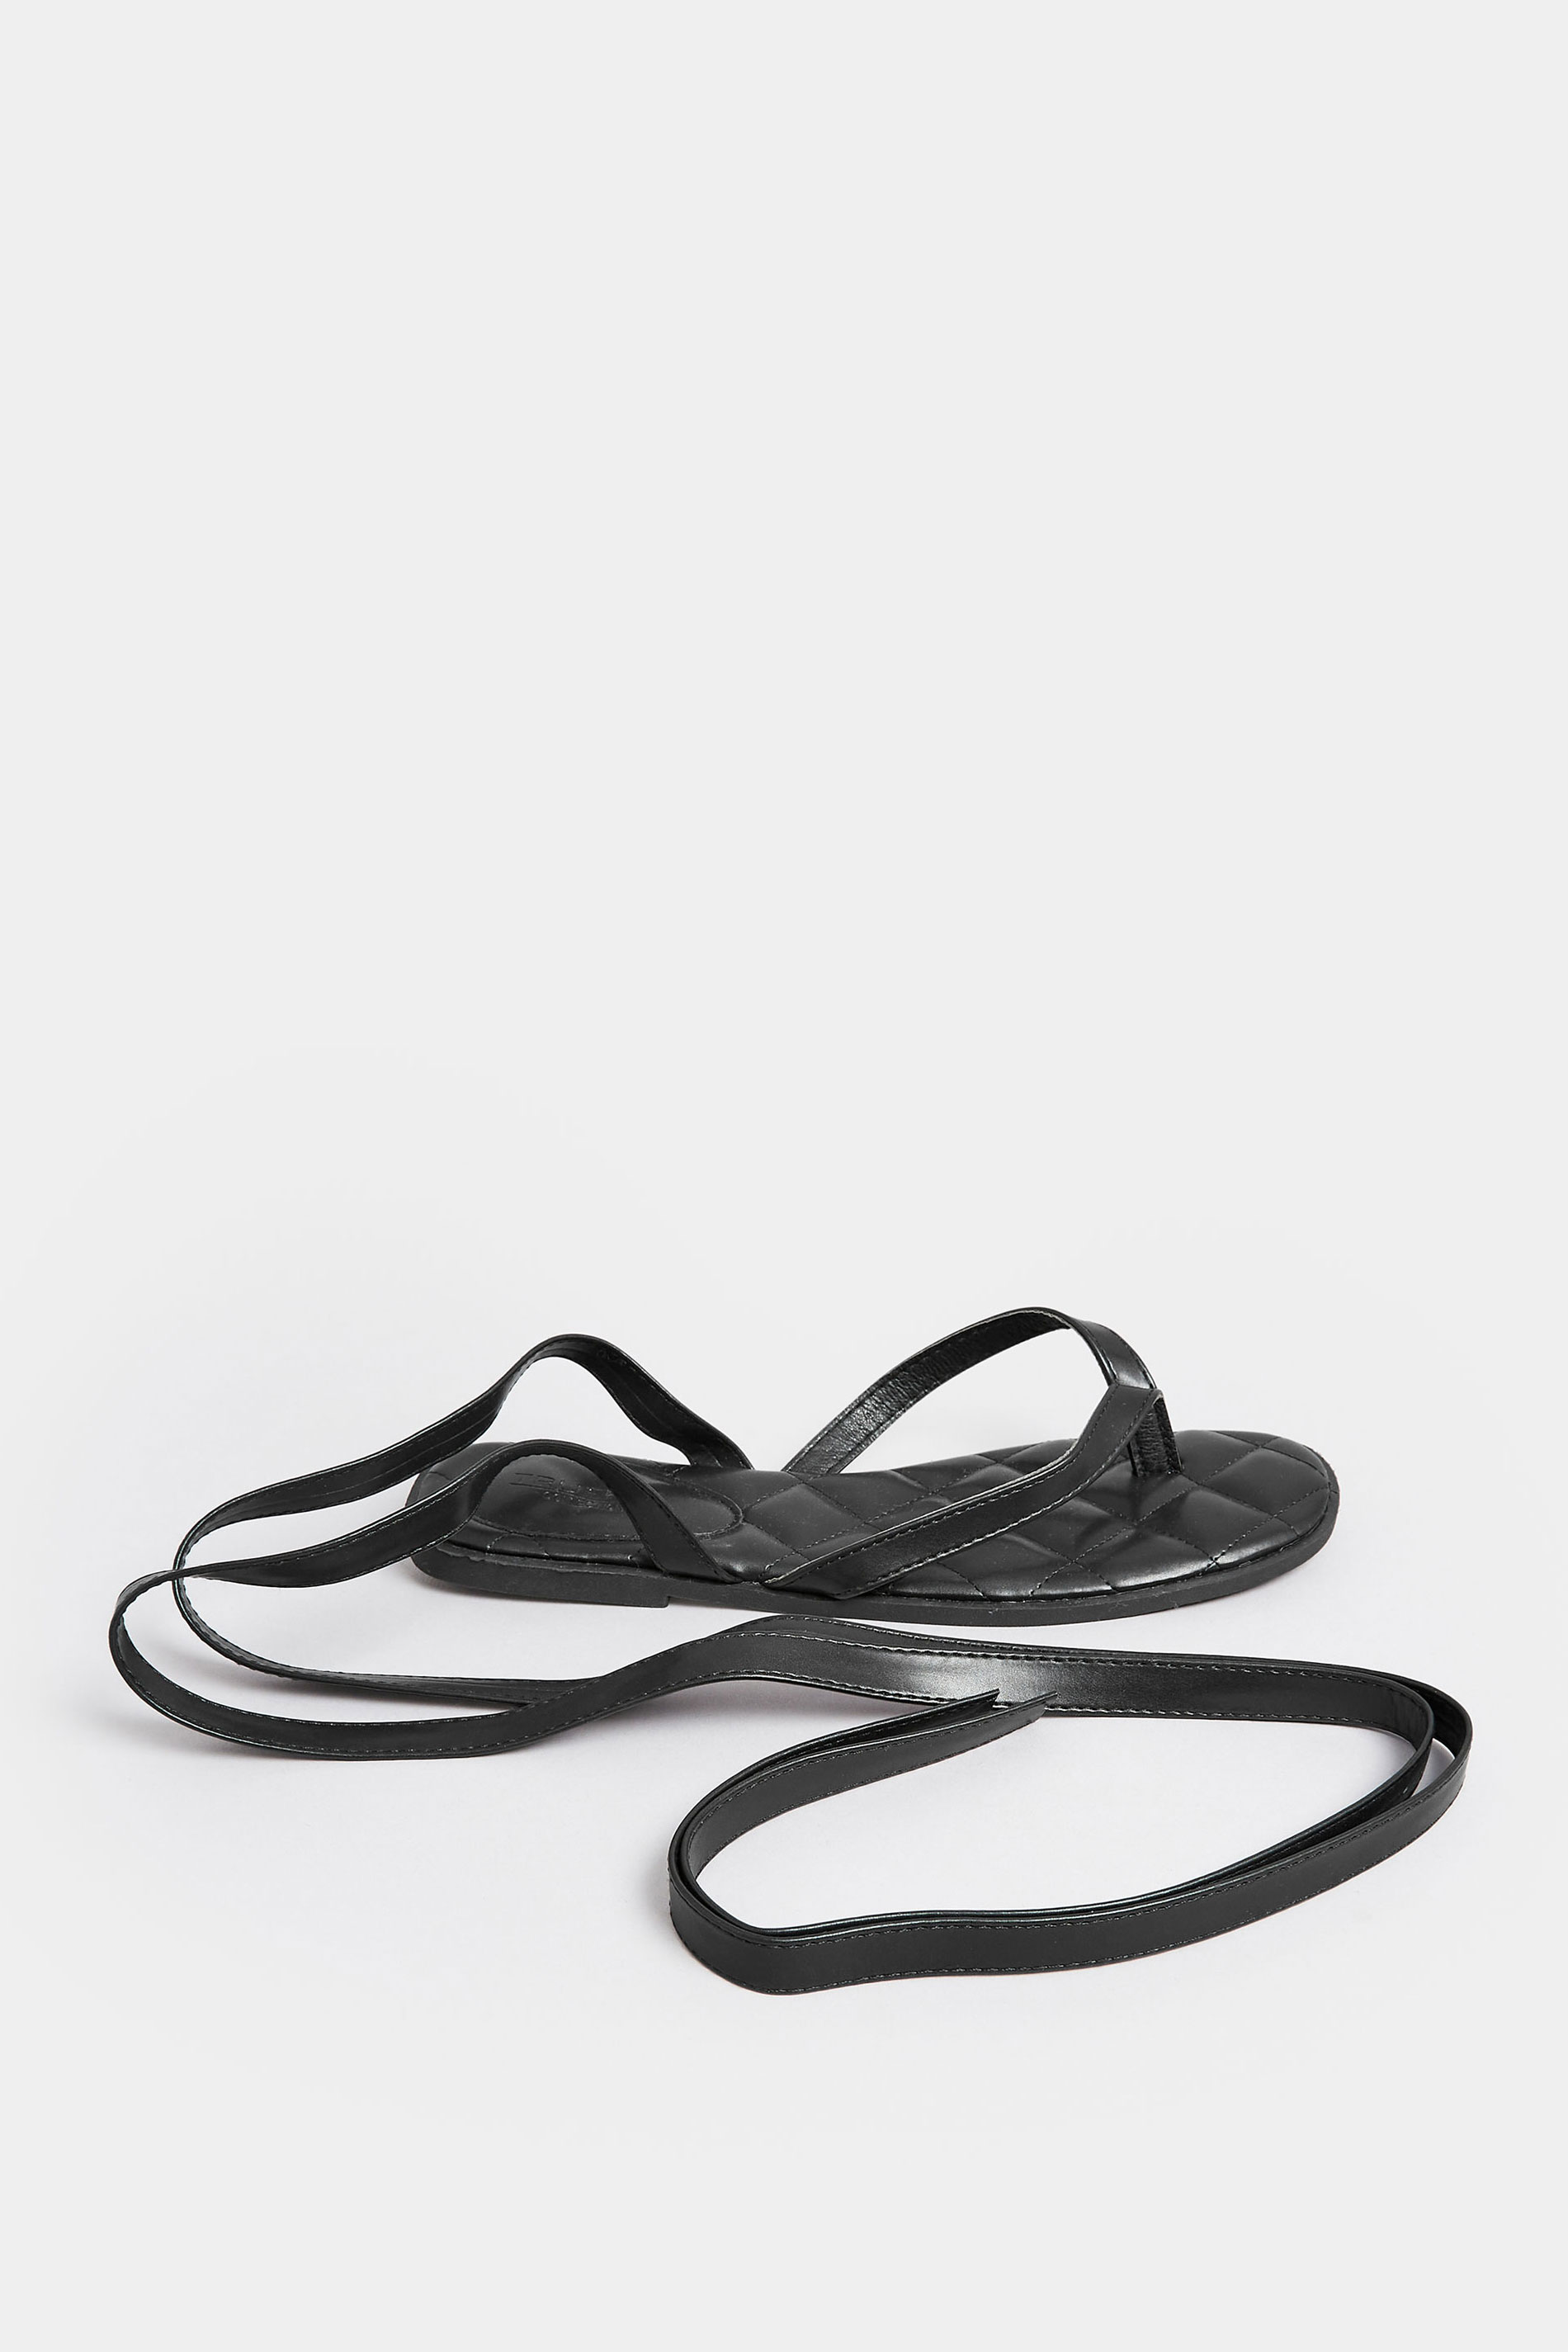 PixieGirl Black Ankle Strap Flat Sandals In Standard Fit | PixieGirl  3